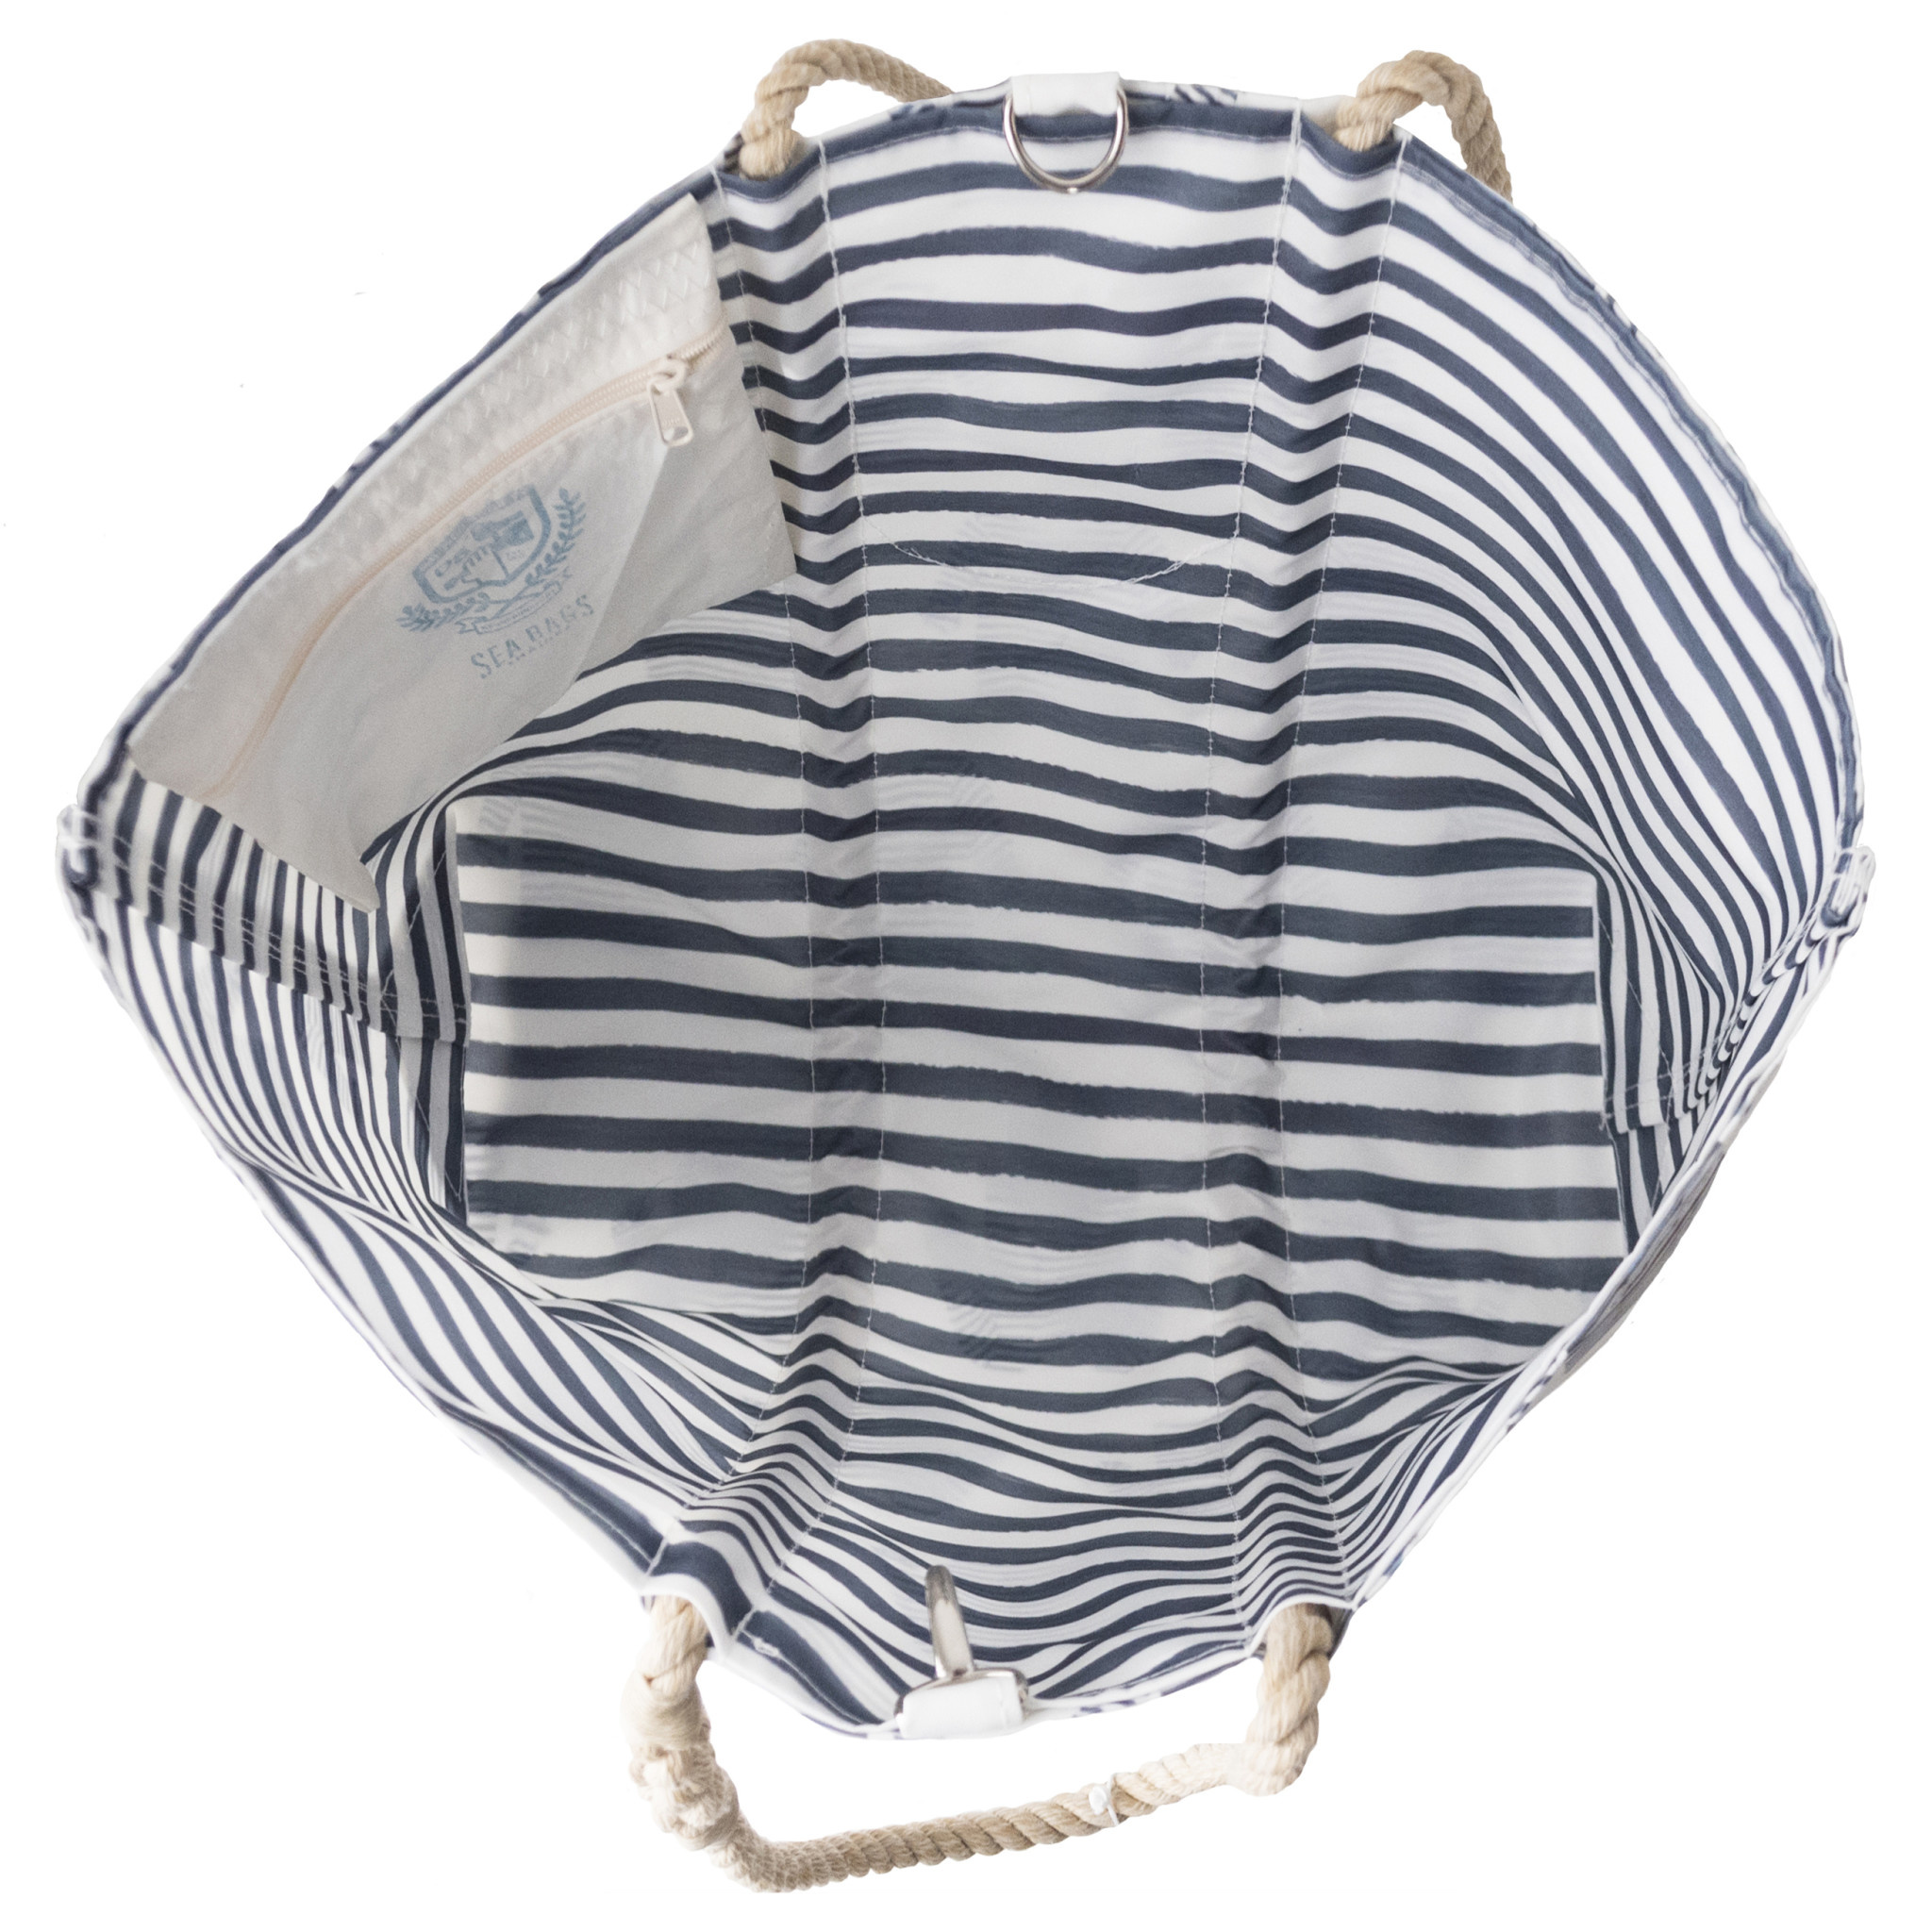 Sea Bags Sara Fitz - Striped Shirt - Medium Tote - Hemp Handle with Clasp